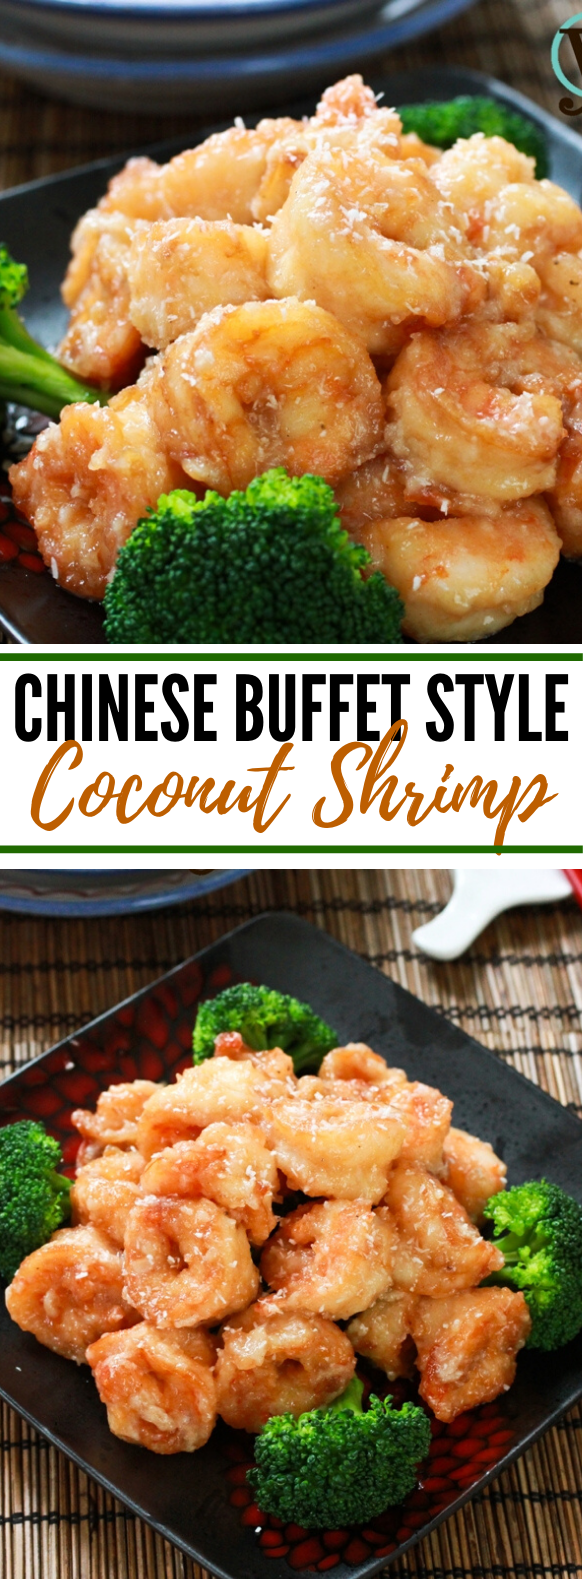 CHINESE BUFFET STYLE COCONUT SHRIMP (椰子蝦) #dinner #meals